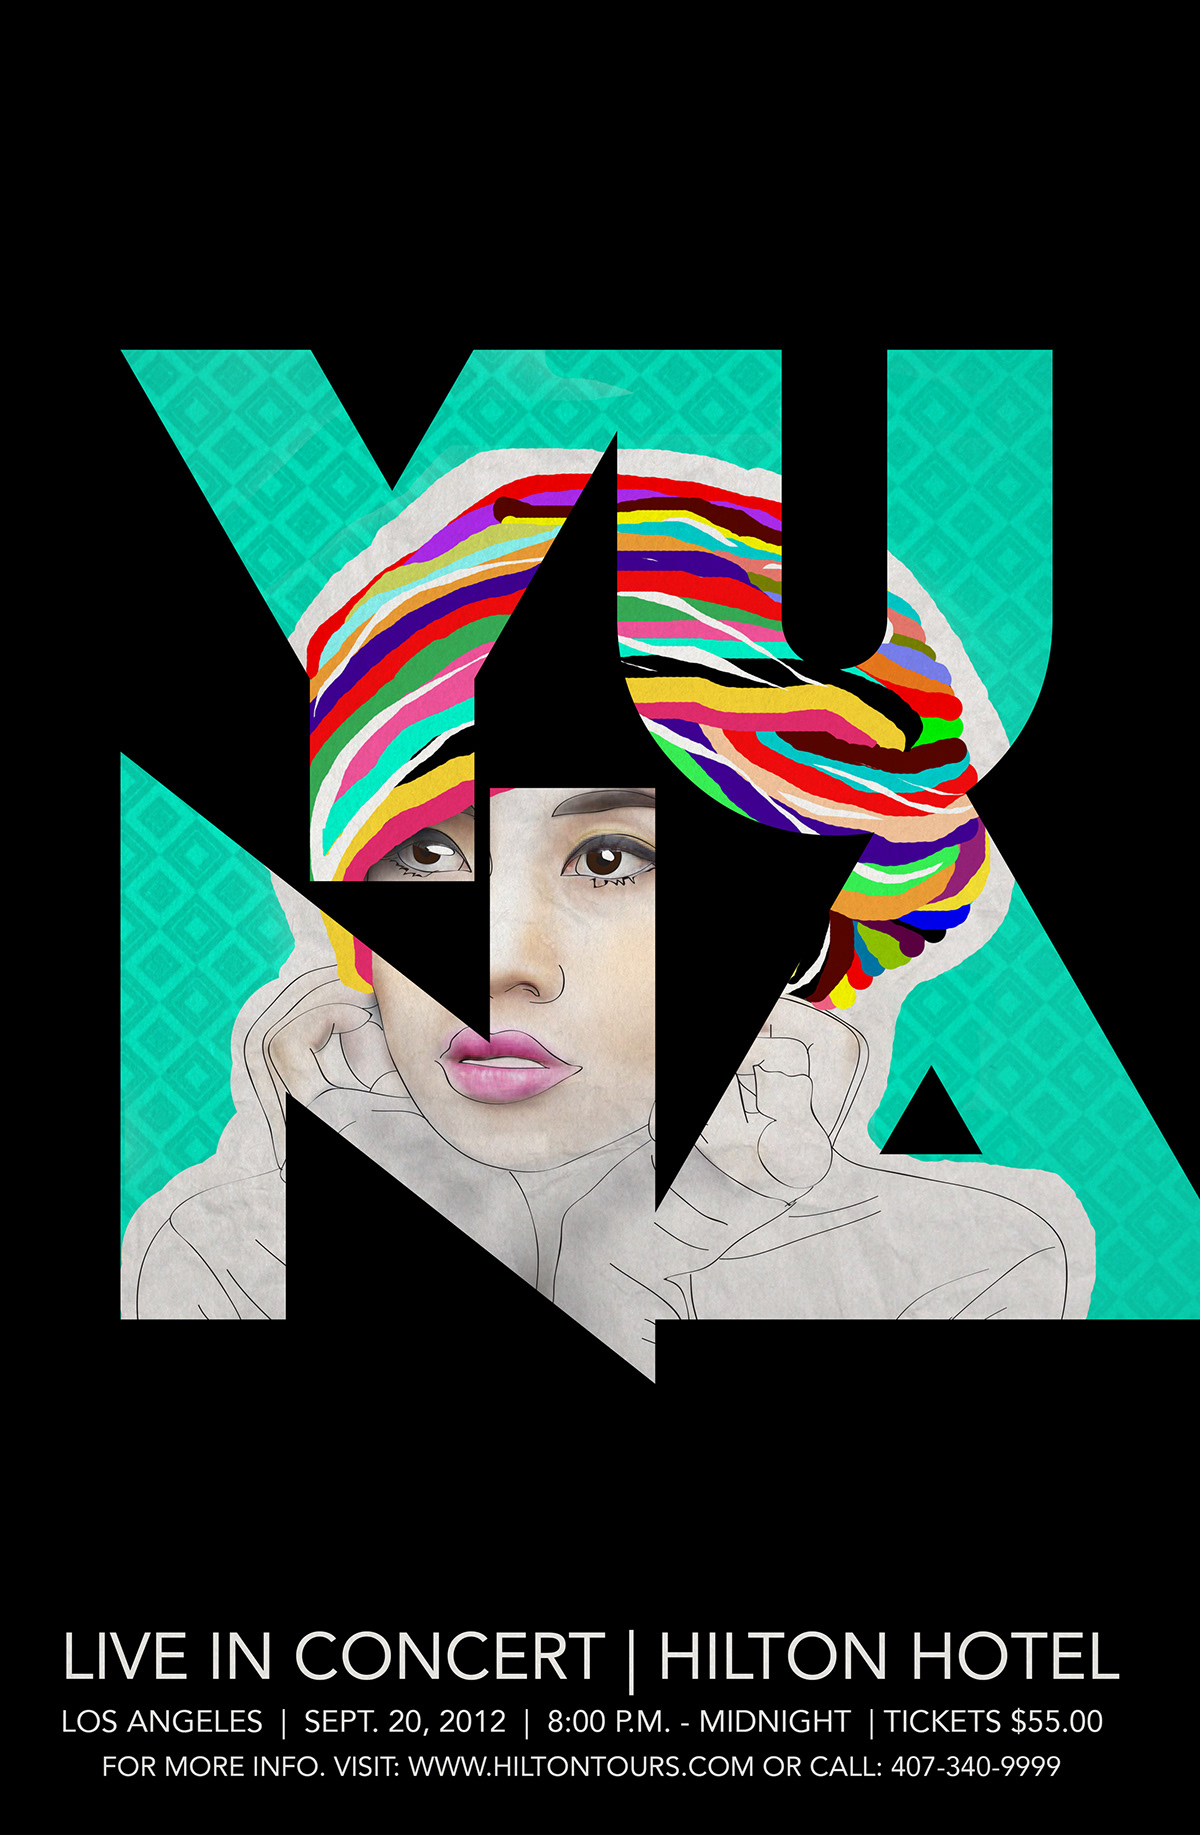 poster concert Kimbra Vanbot fictional colorful Illustrative florrie yuna